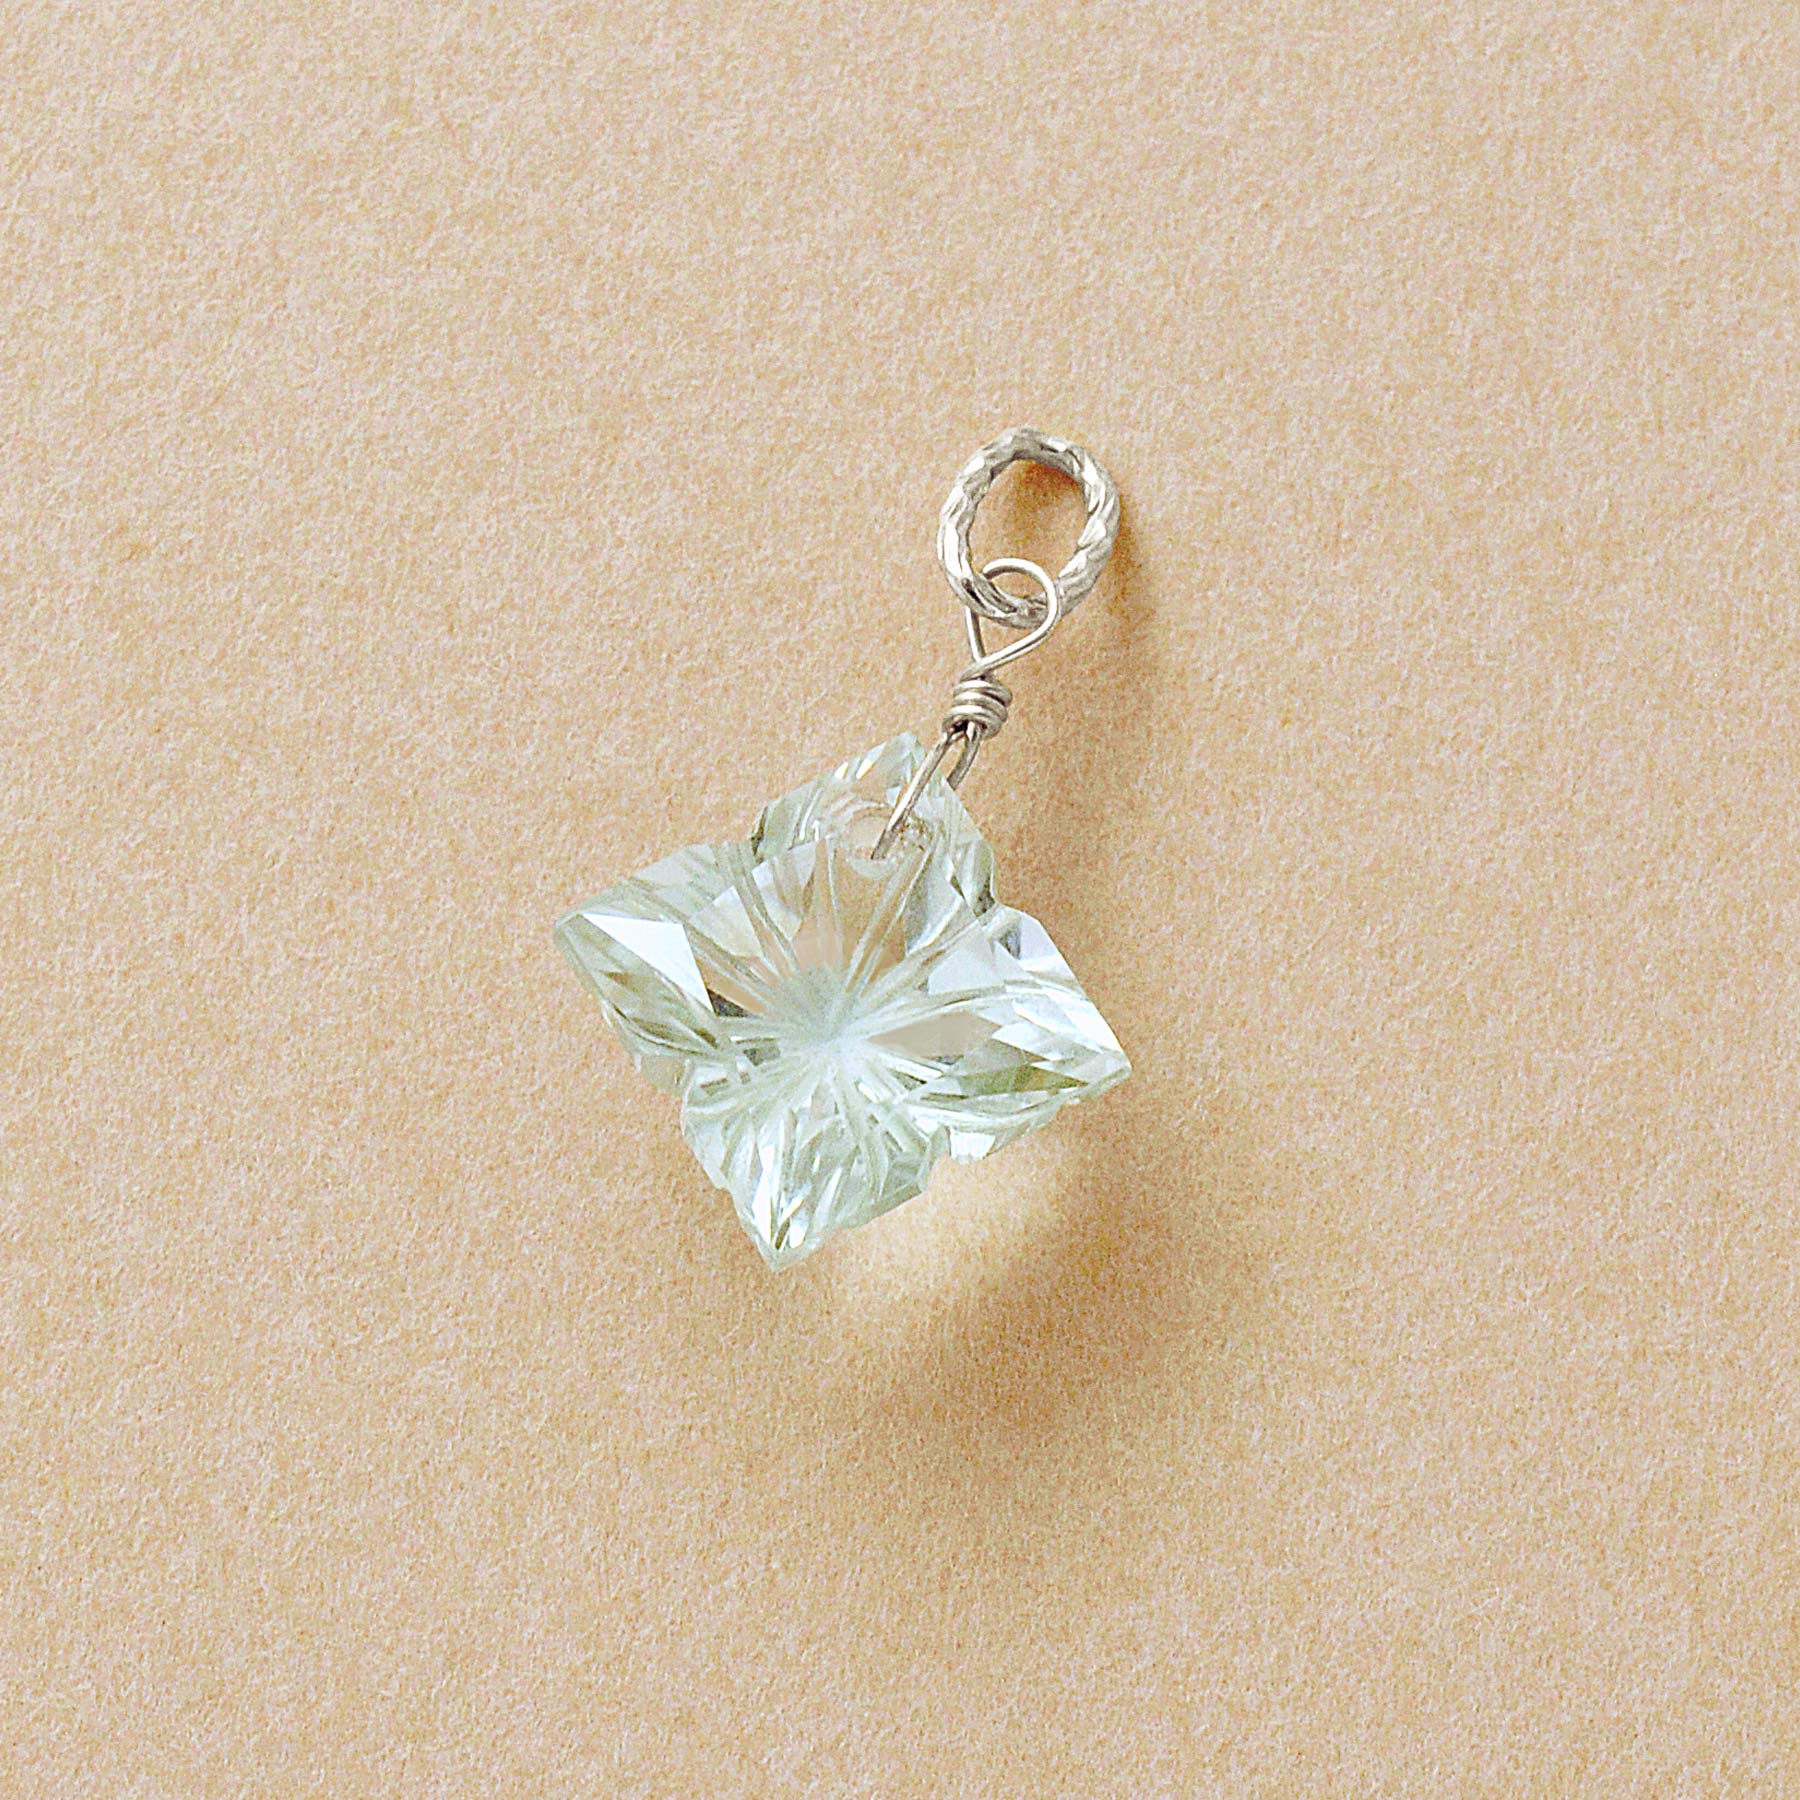 10K Green Quartz Necklace Charm (White Gold) - Product Image